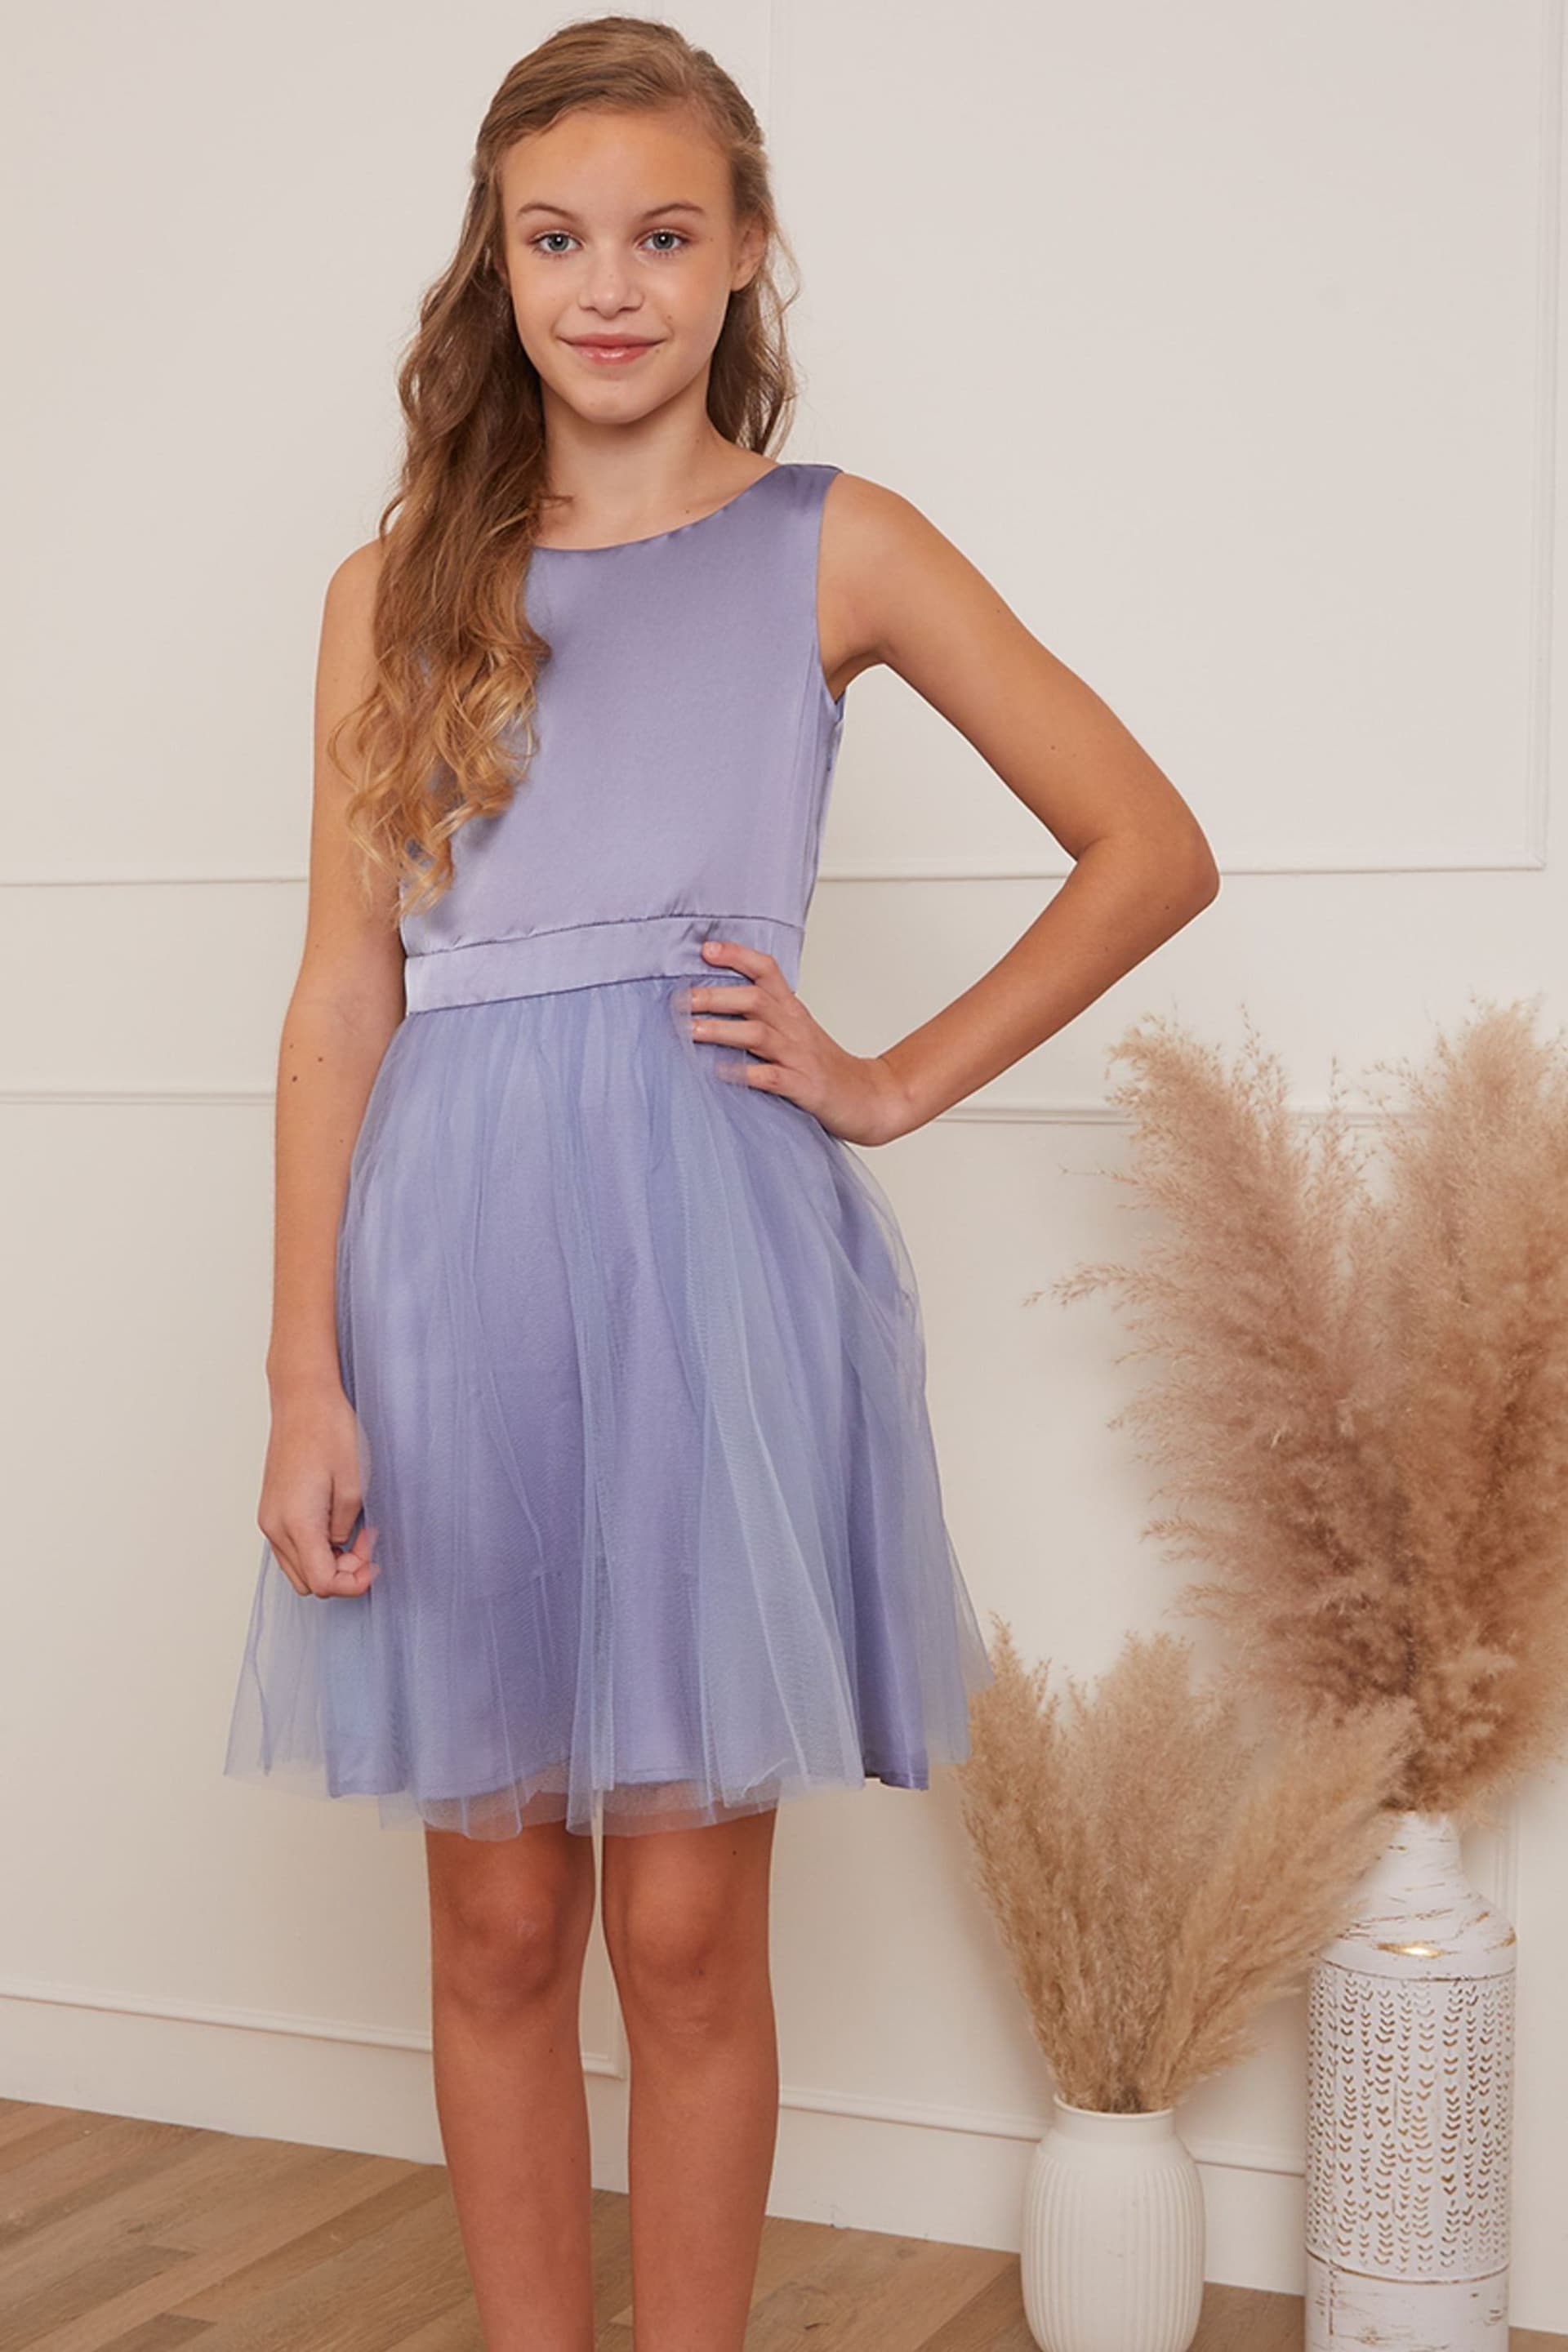 Chi Chi London Blue Satin Tulle Skirt Dress - Girls - Image 1 of 4